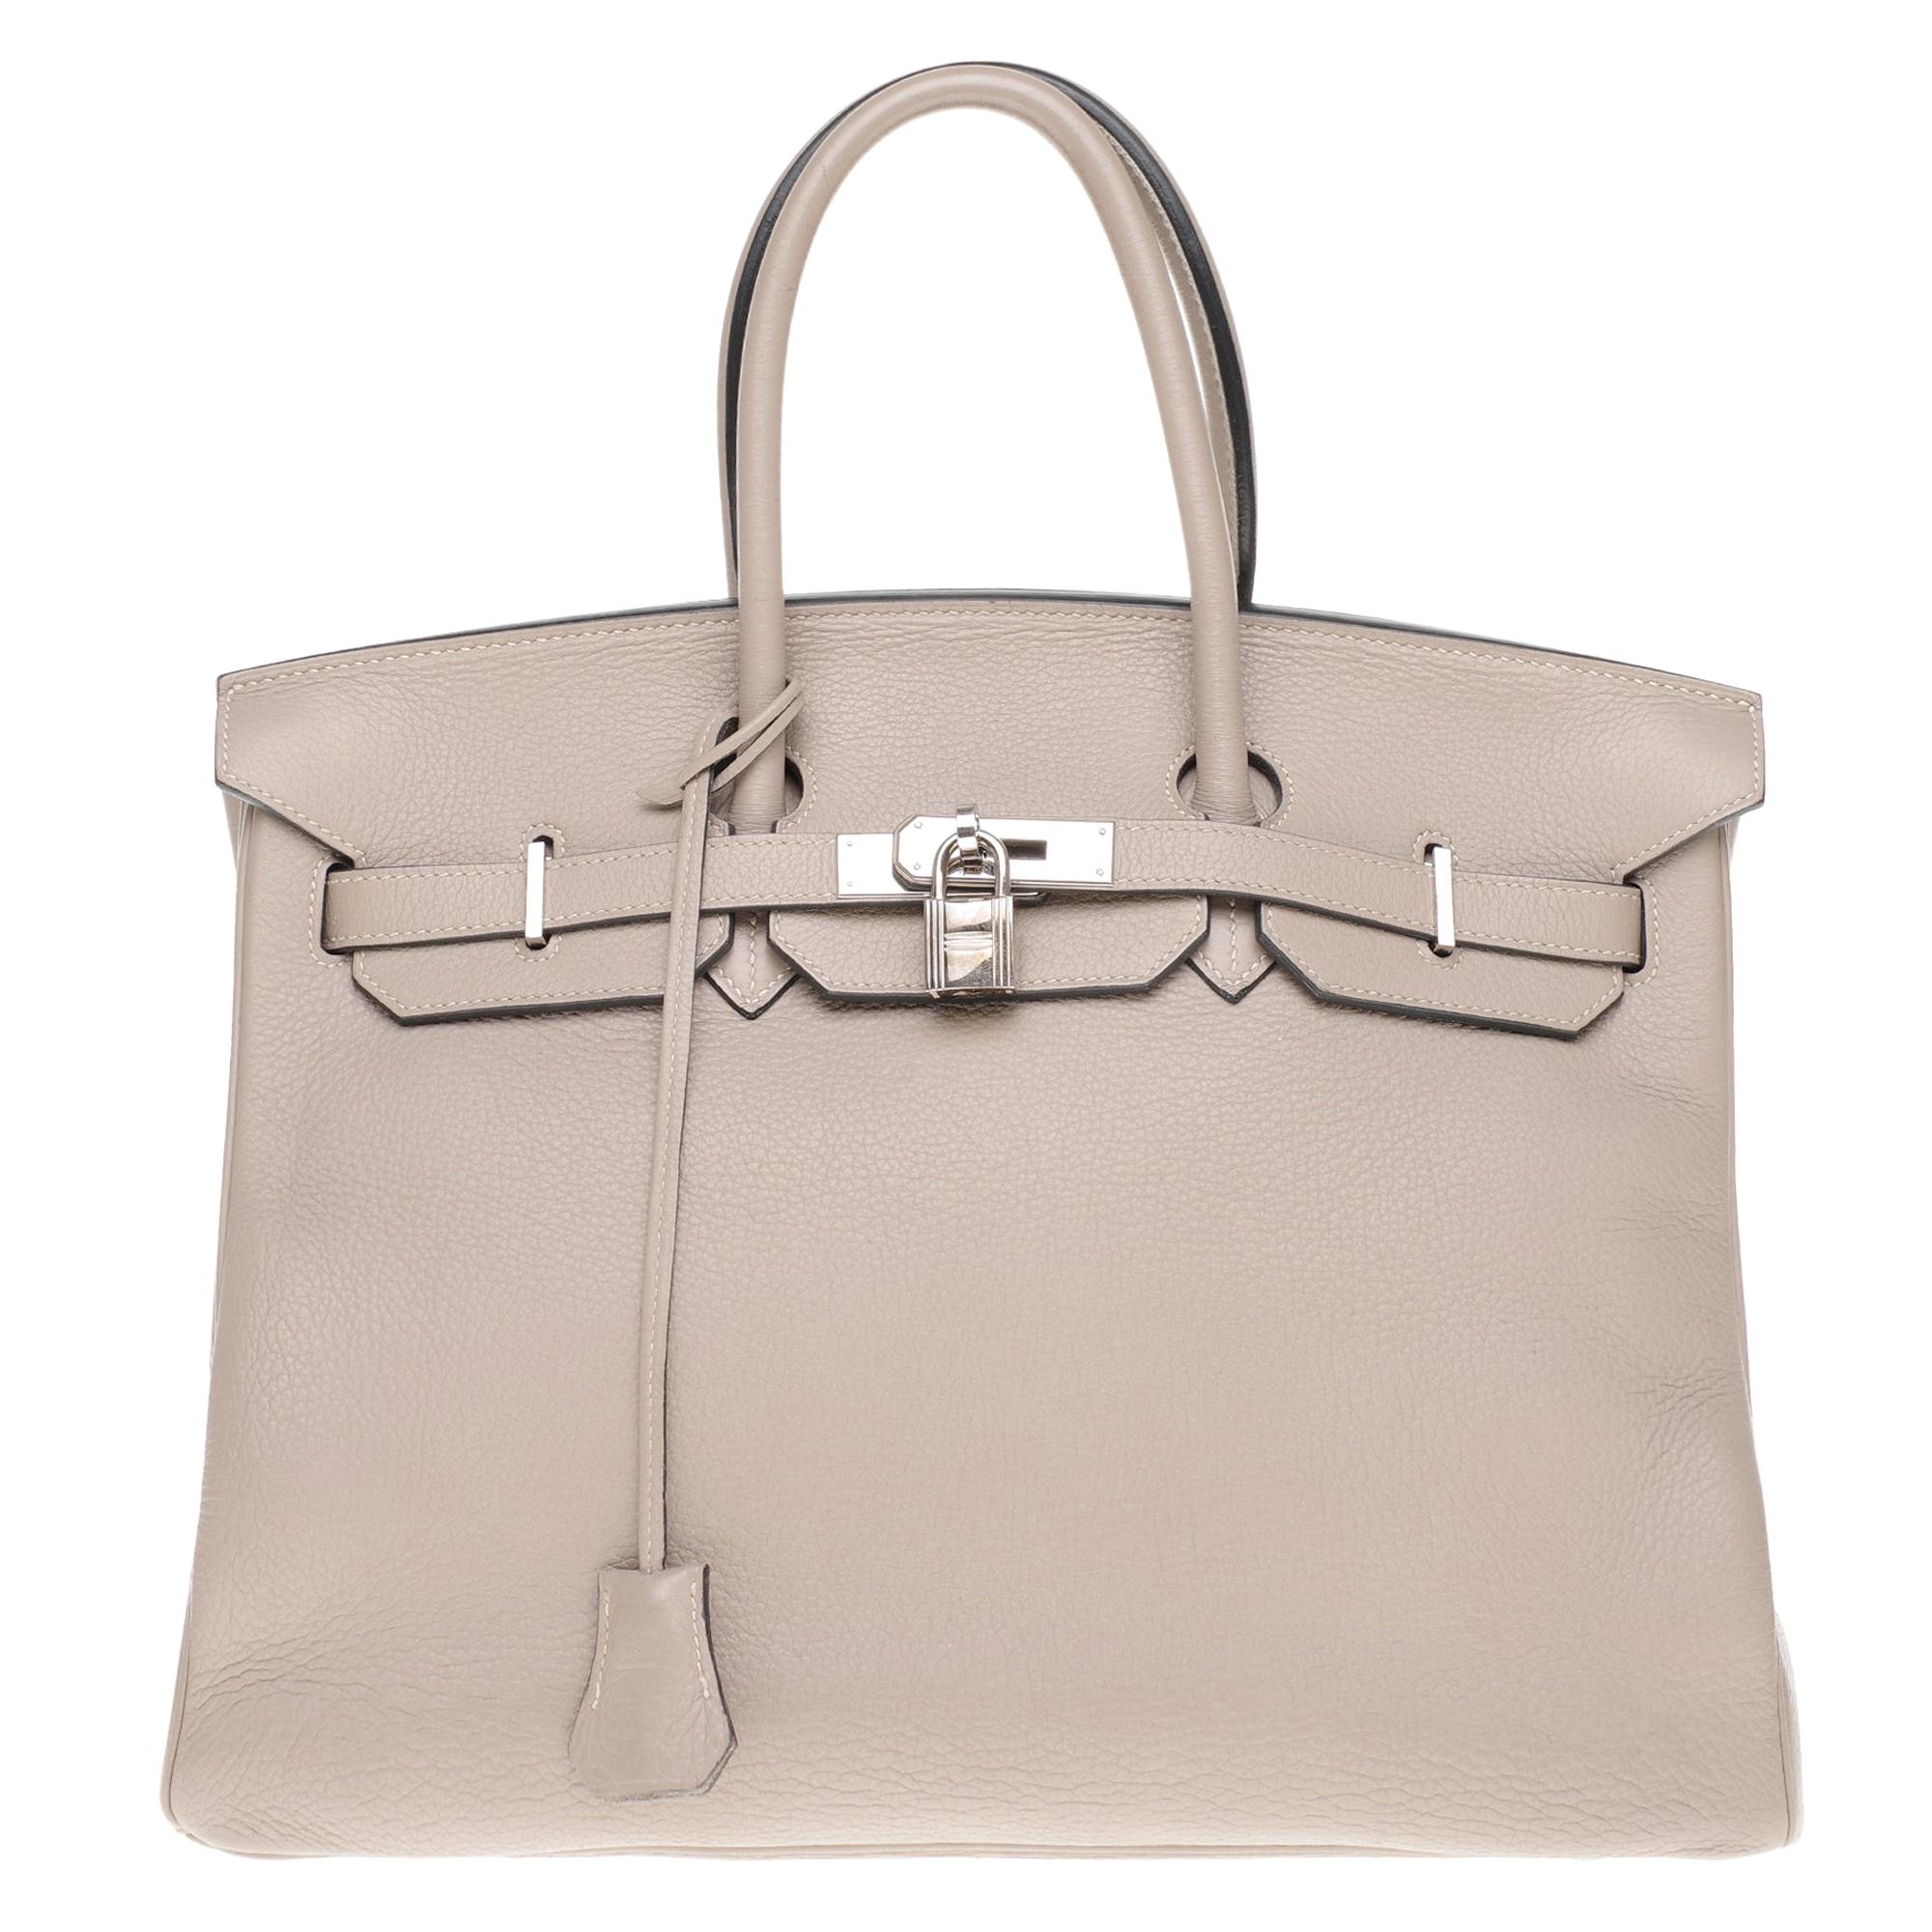 Rare Hermès Birkin 35 handbag in Togo Dove Grey leather, Silver hardware !